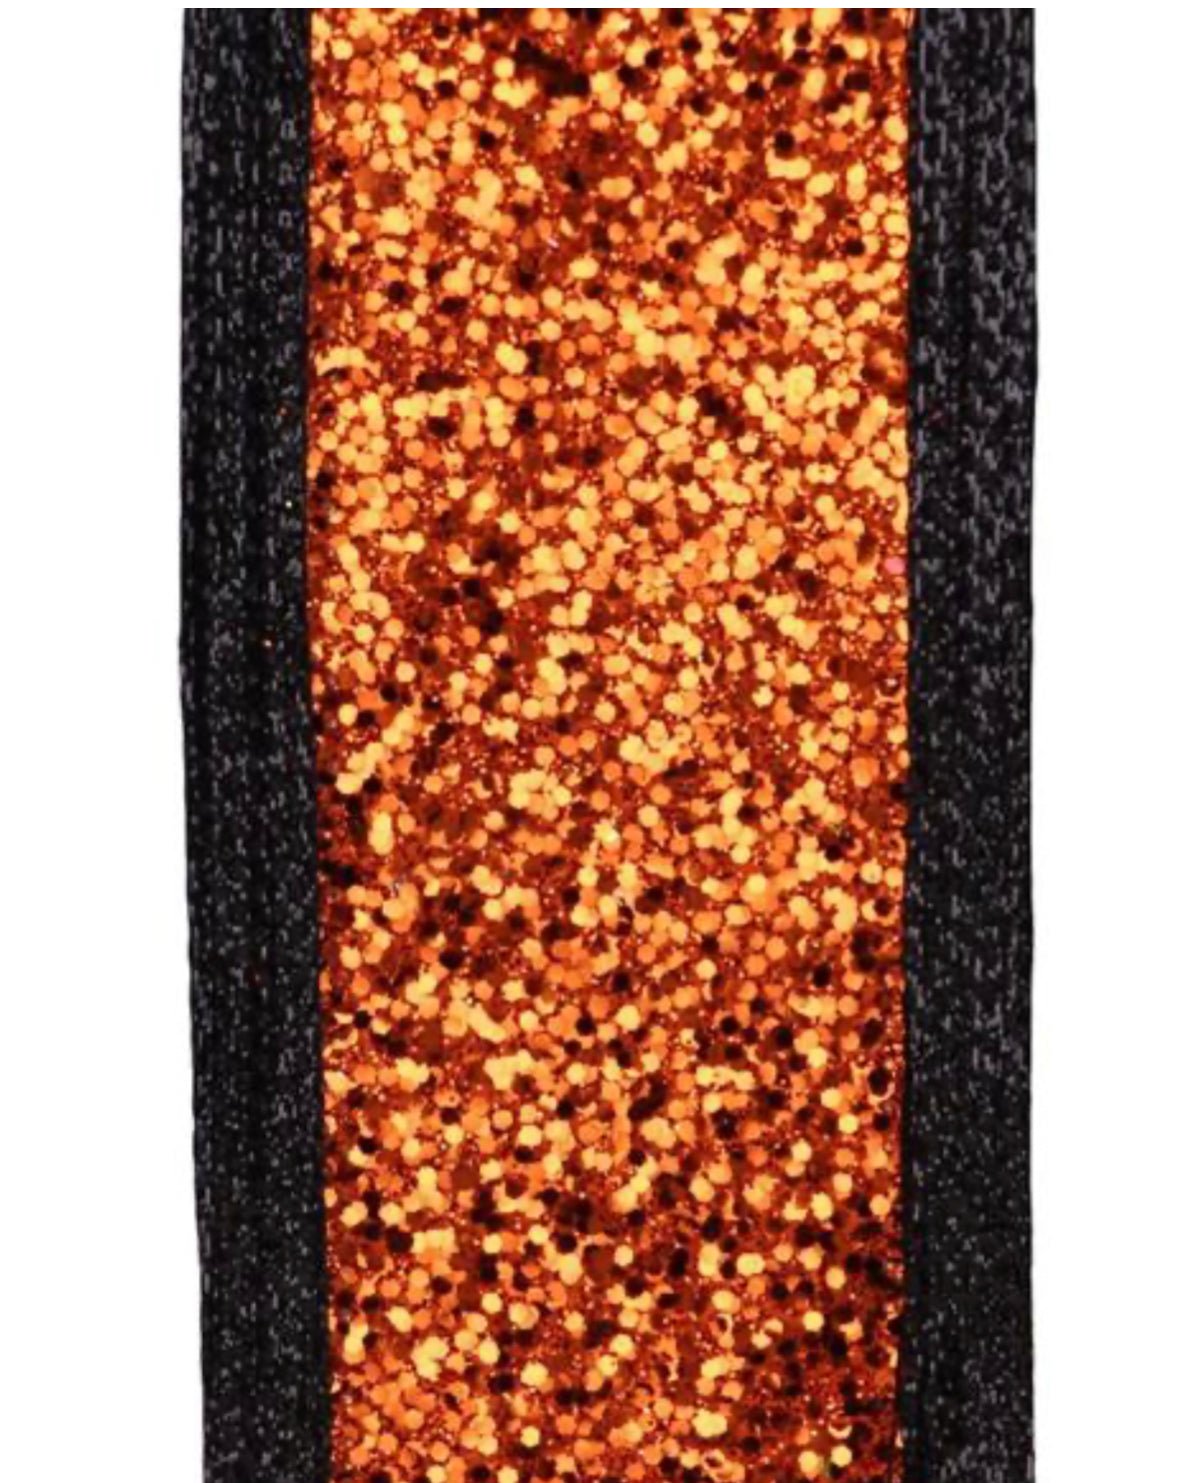 Black and orange chunky glitter wired ribbon, 1.5